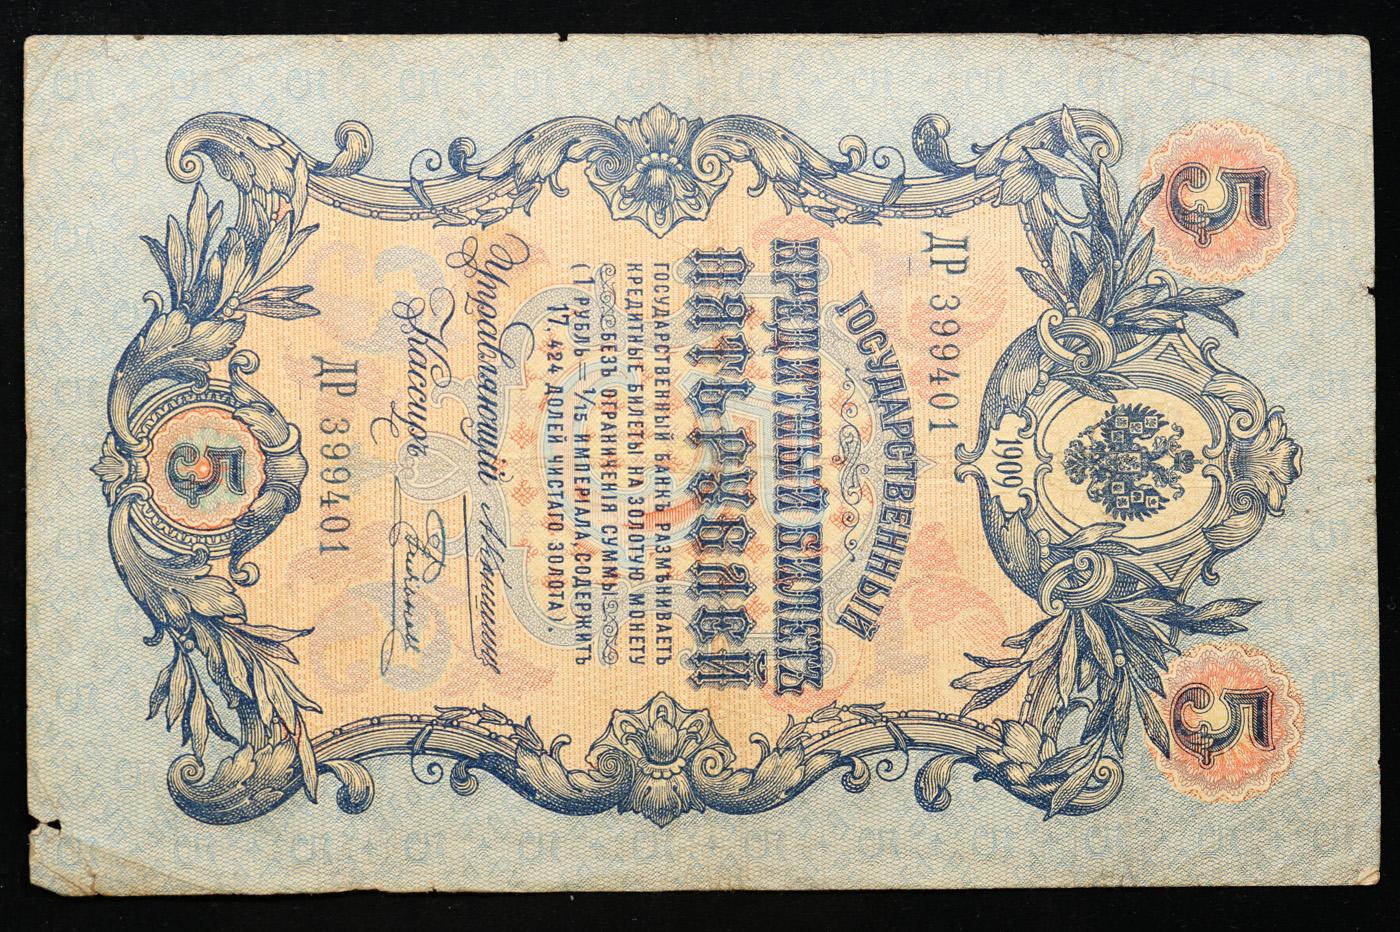 1909 Imperial Russia 5 Ruble Note P# 10A Grades vf++